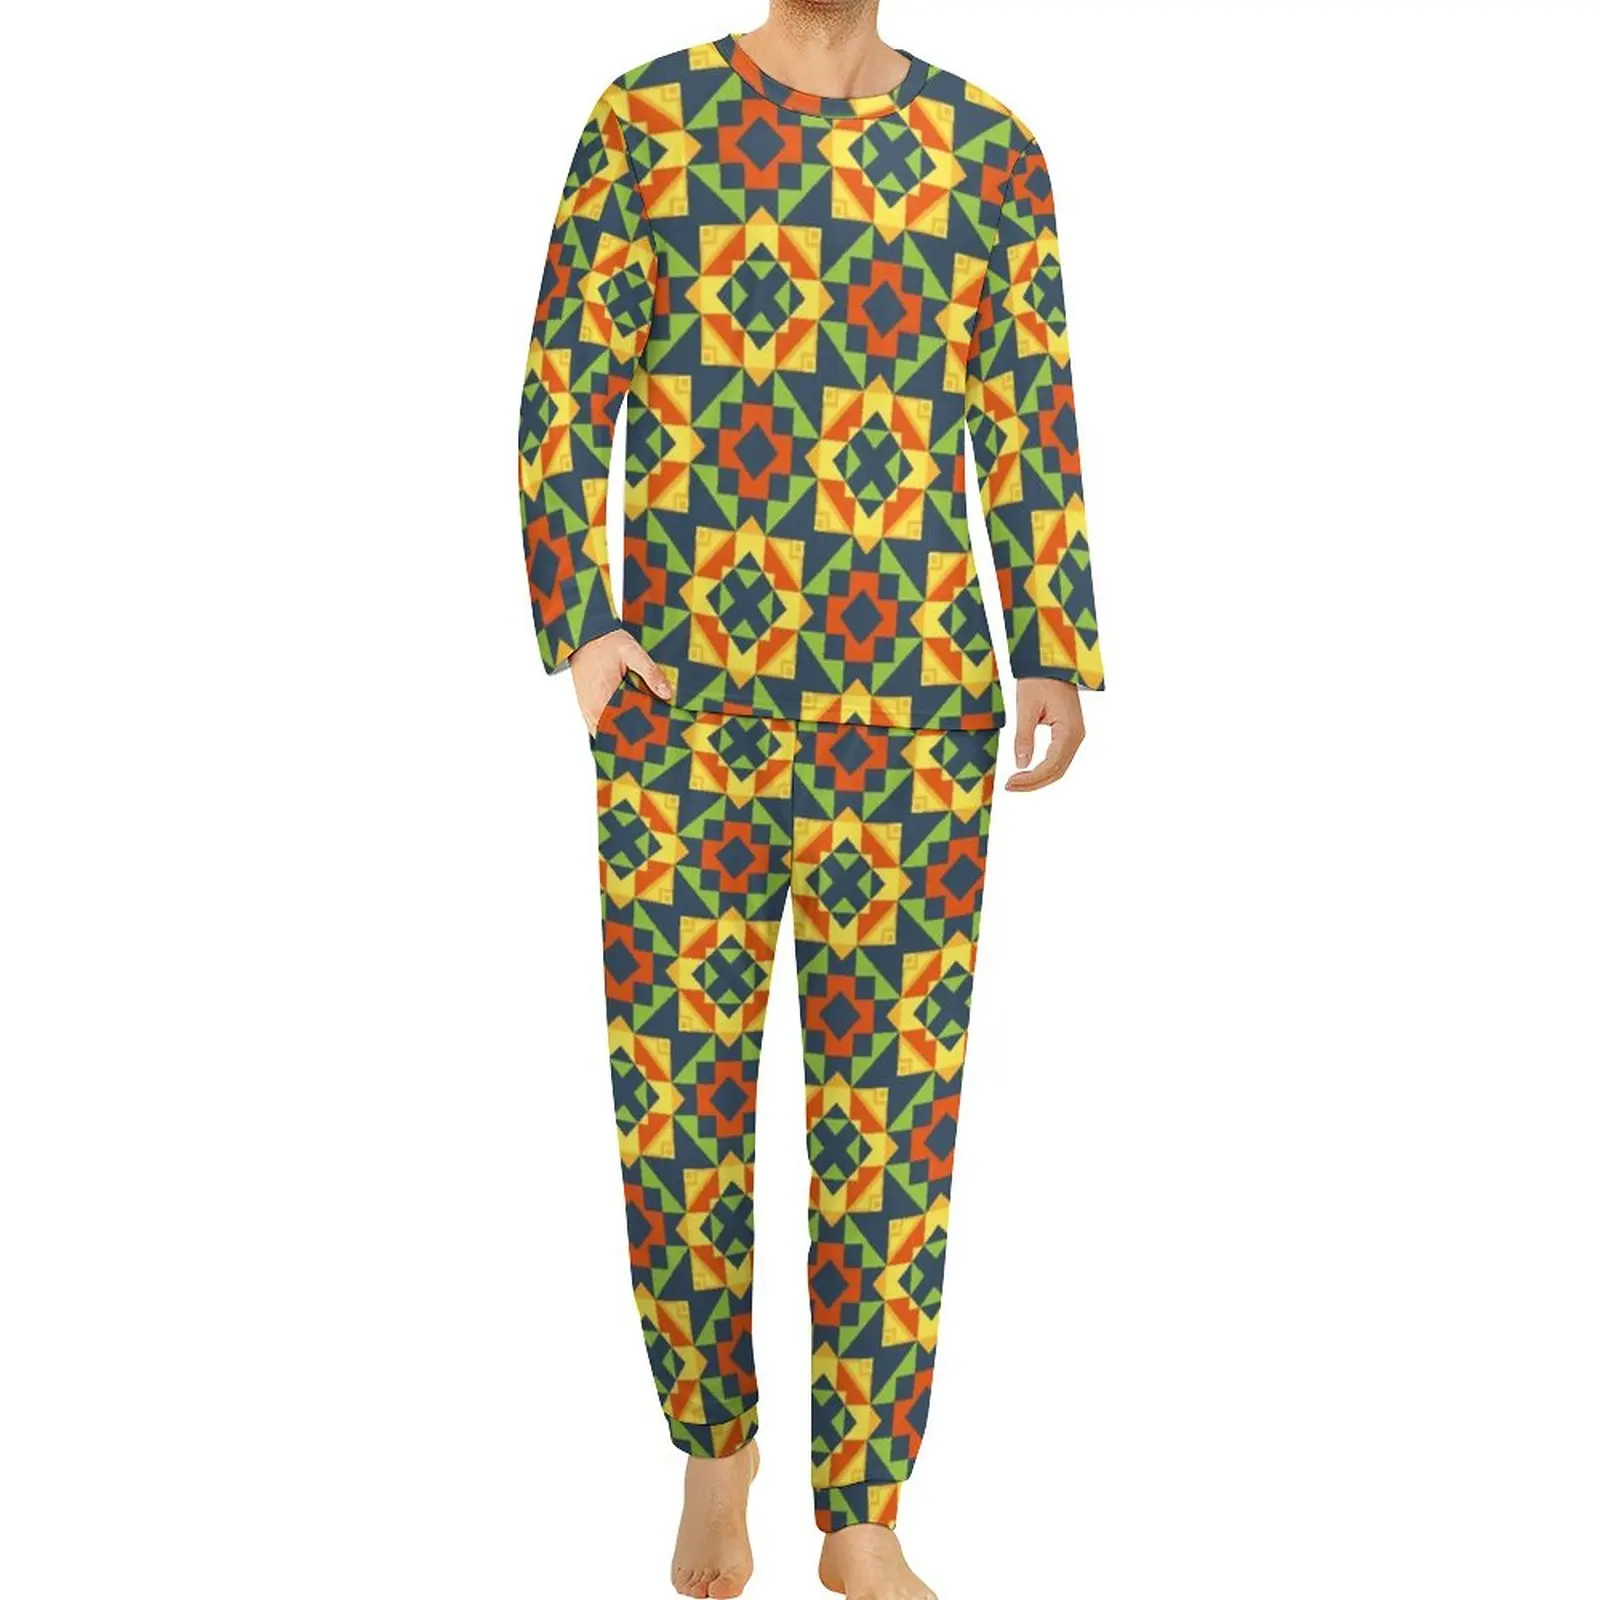 Vintage Geo Print Pajamas Daily 2 Piece Design Square Cute Pajama Sets Man Long Sleeves Sleep Pattern Nightwear Big Size 4XL 5XL